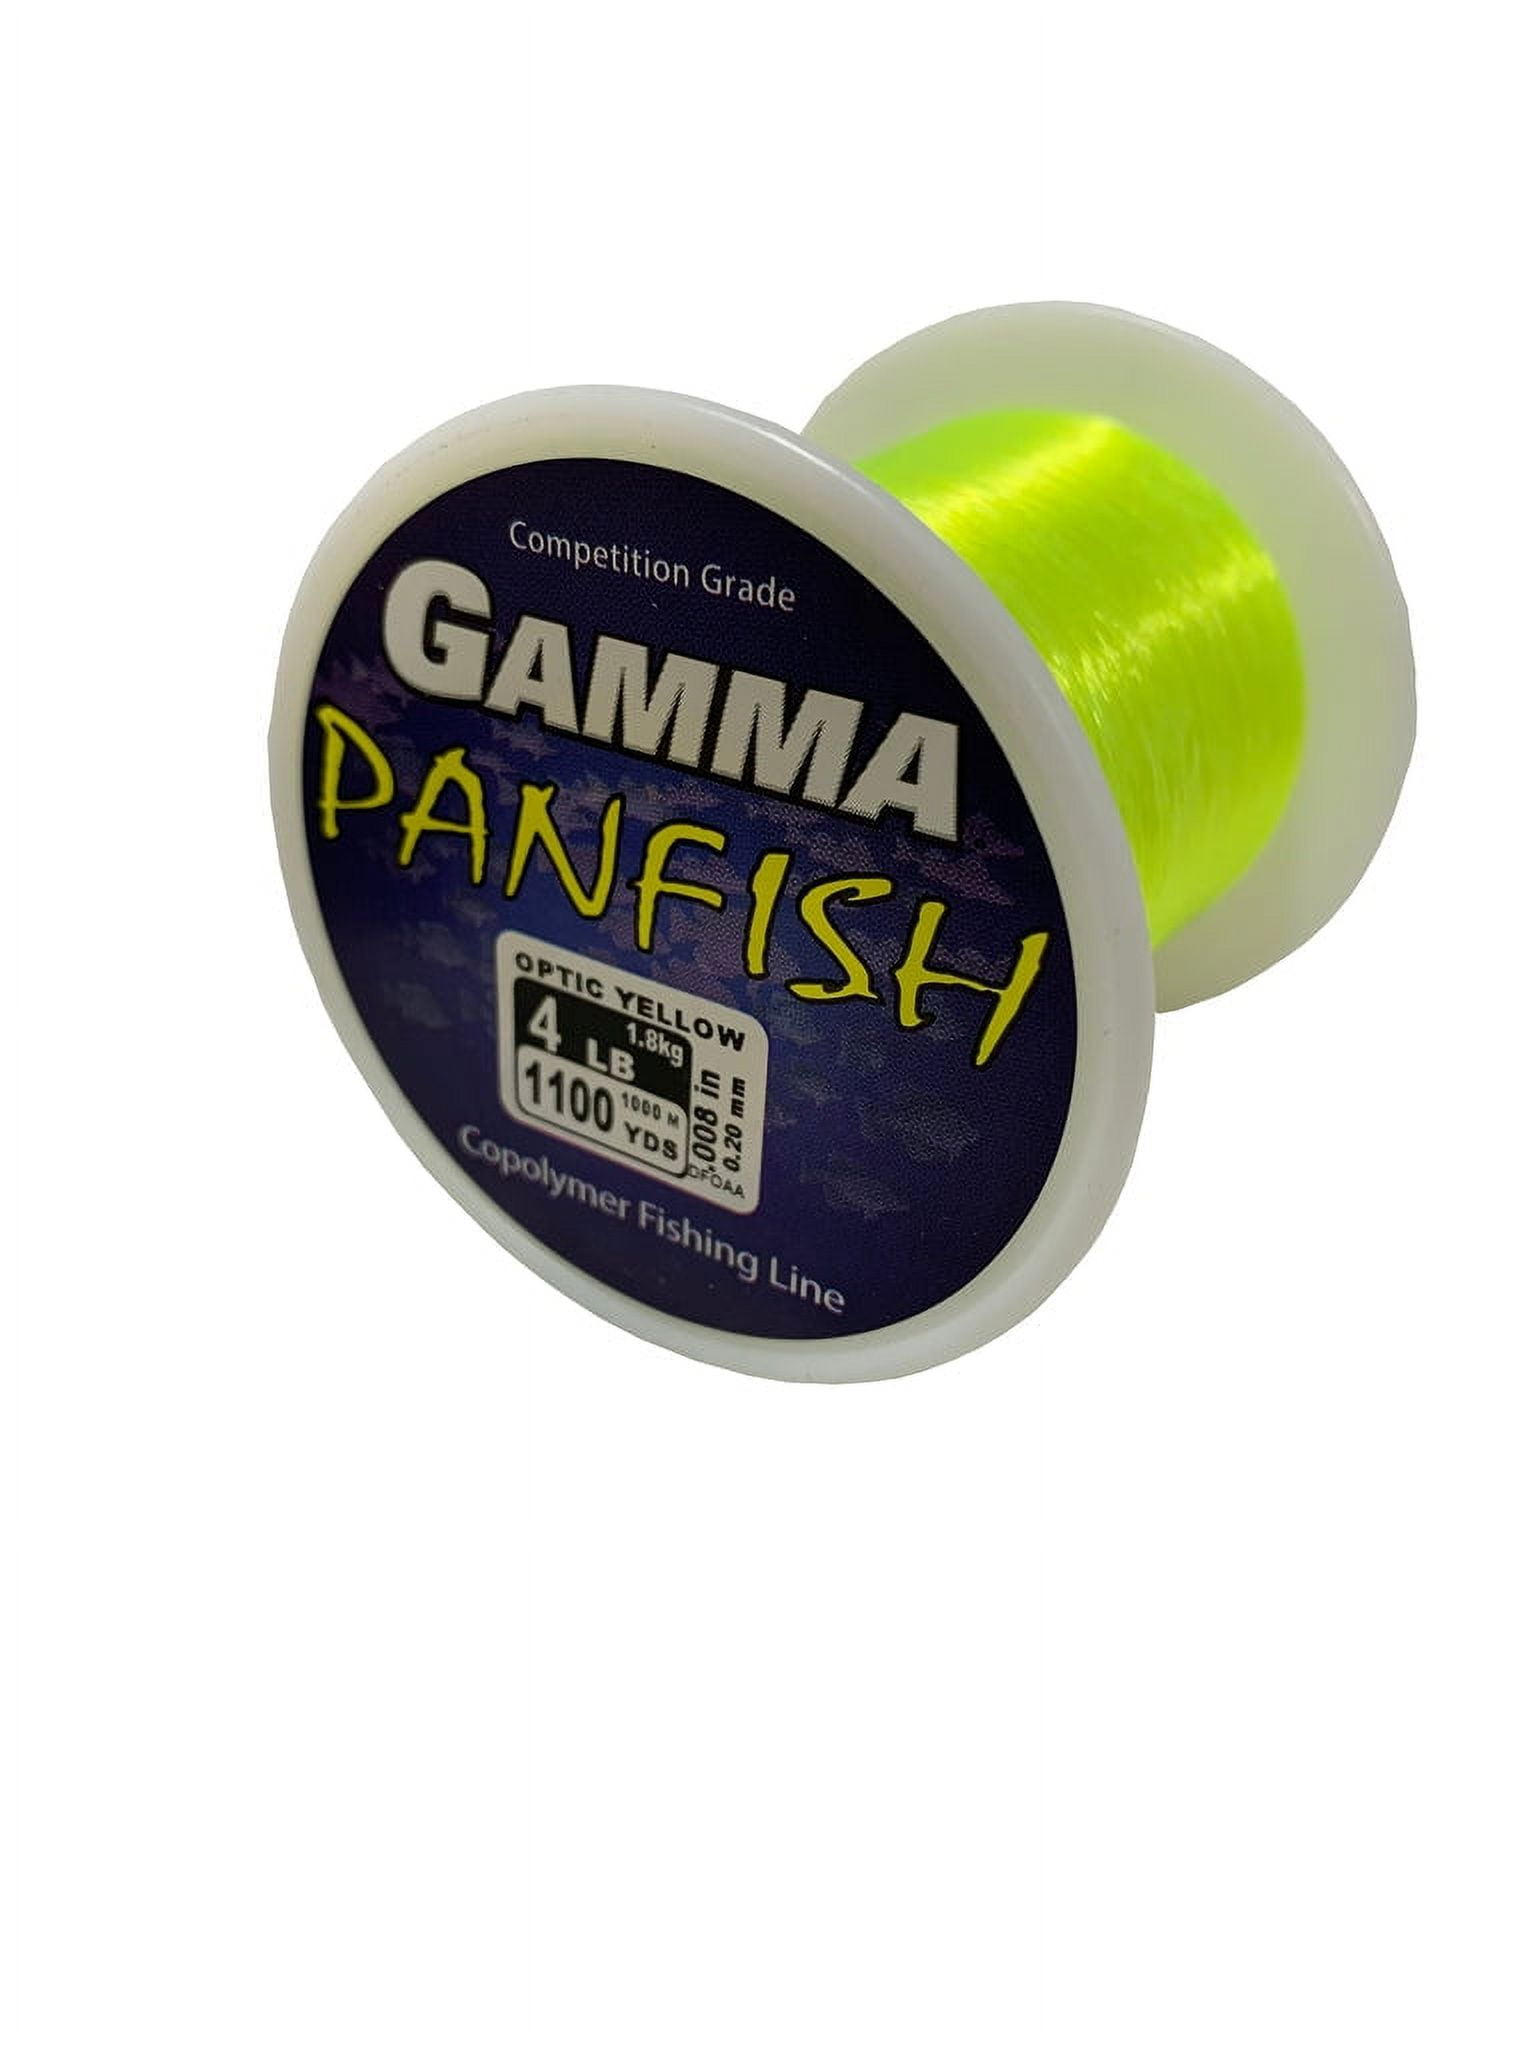 Copolymer - Moss Green Re-Fill Spool – GammaFishing